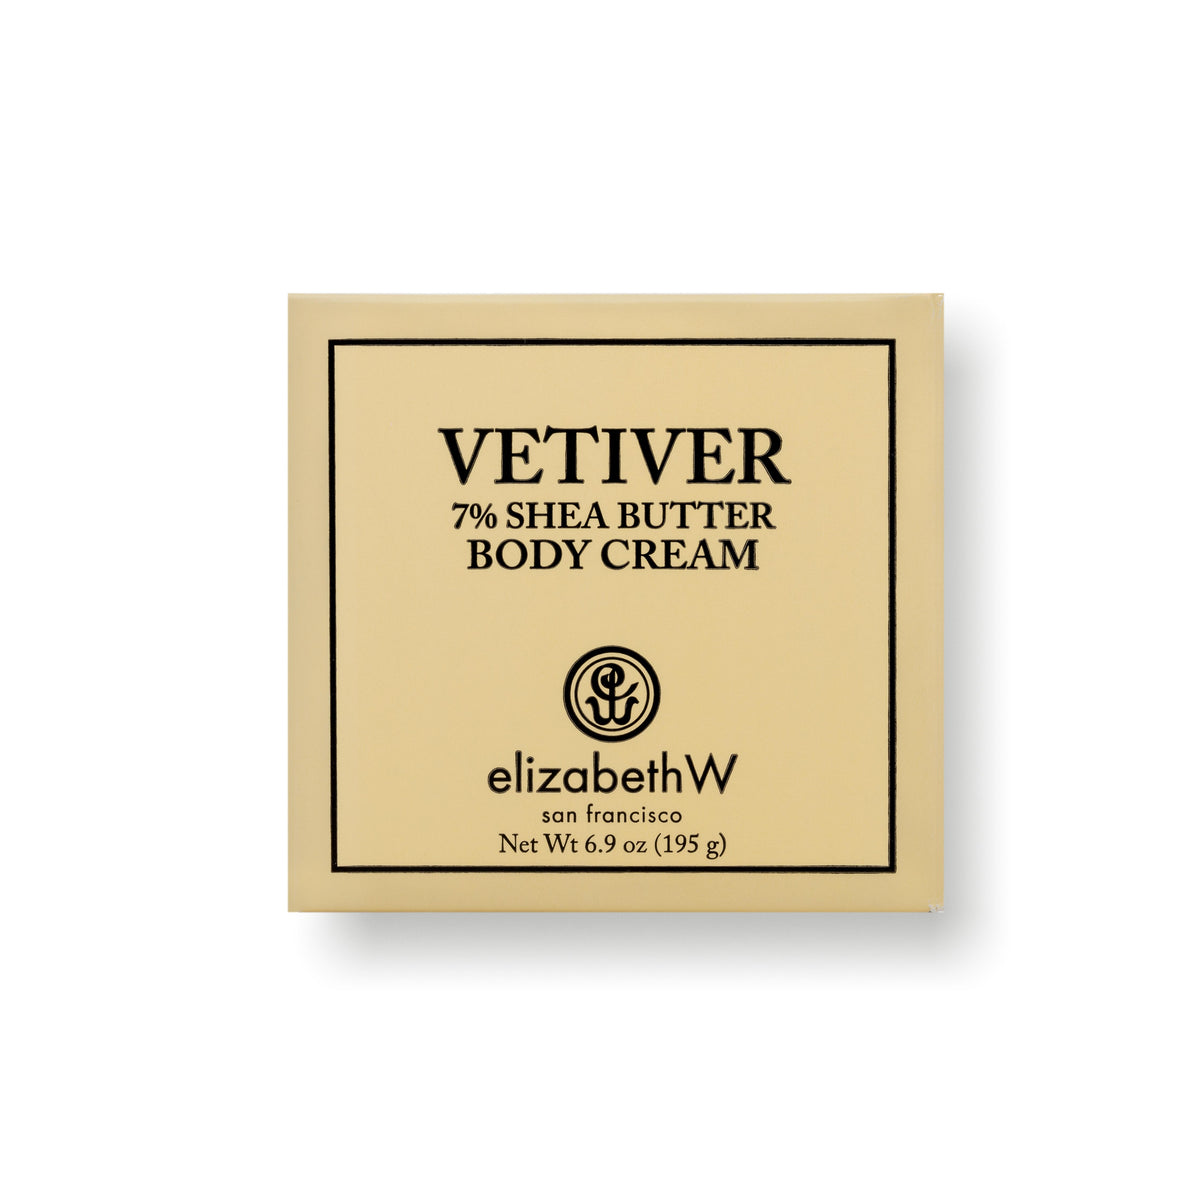 Vetiver Body Cream